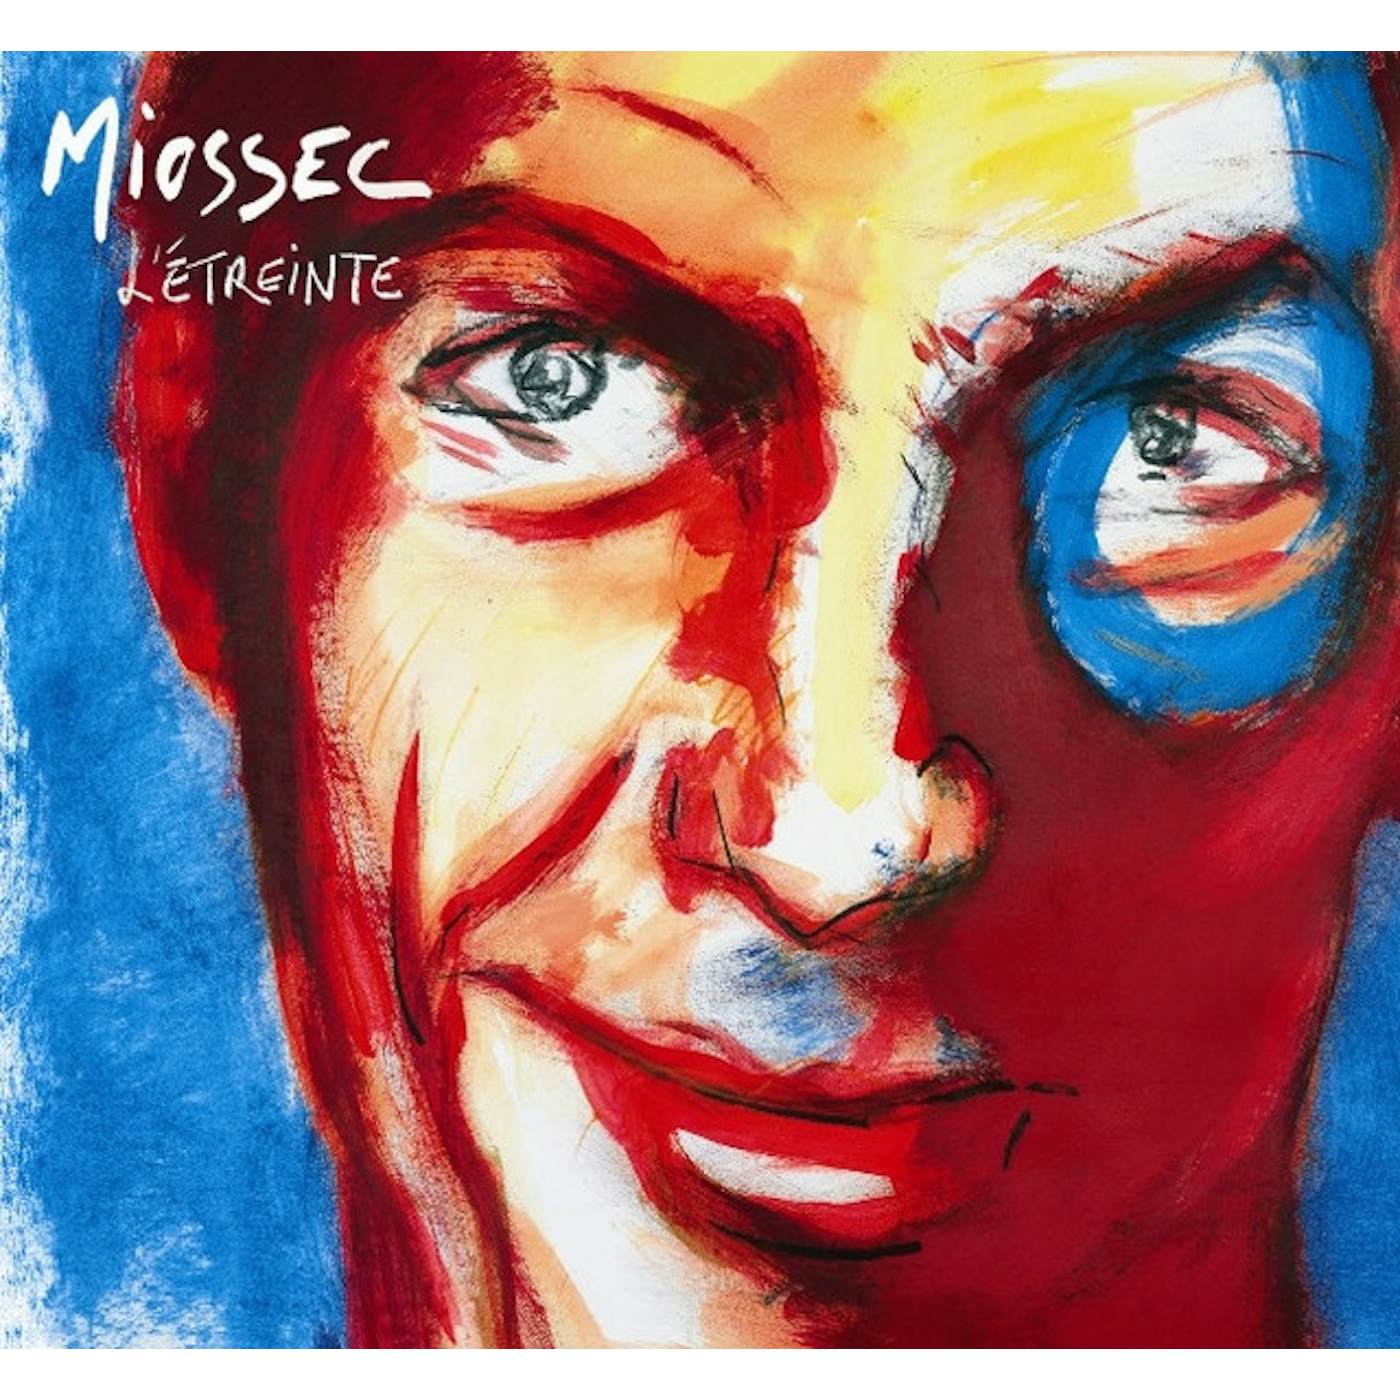 Miossec L'ETREINTE Vinyl Record